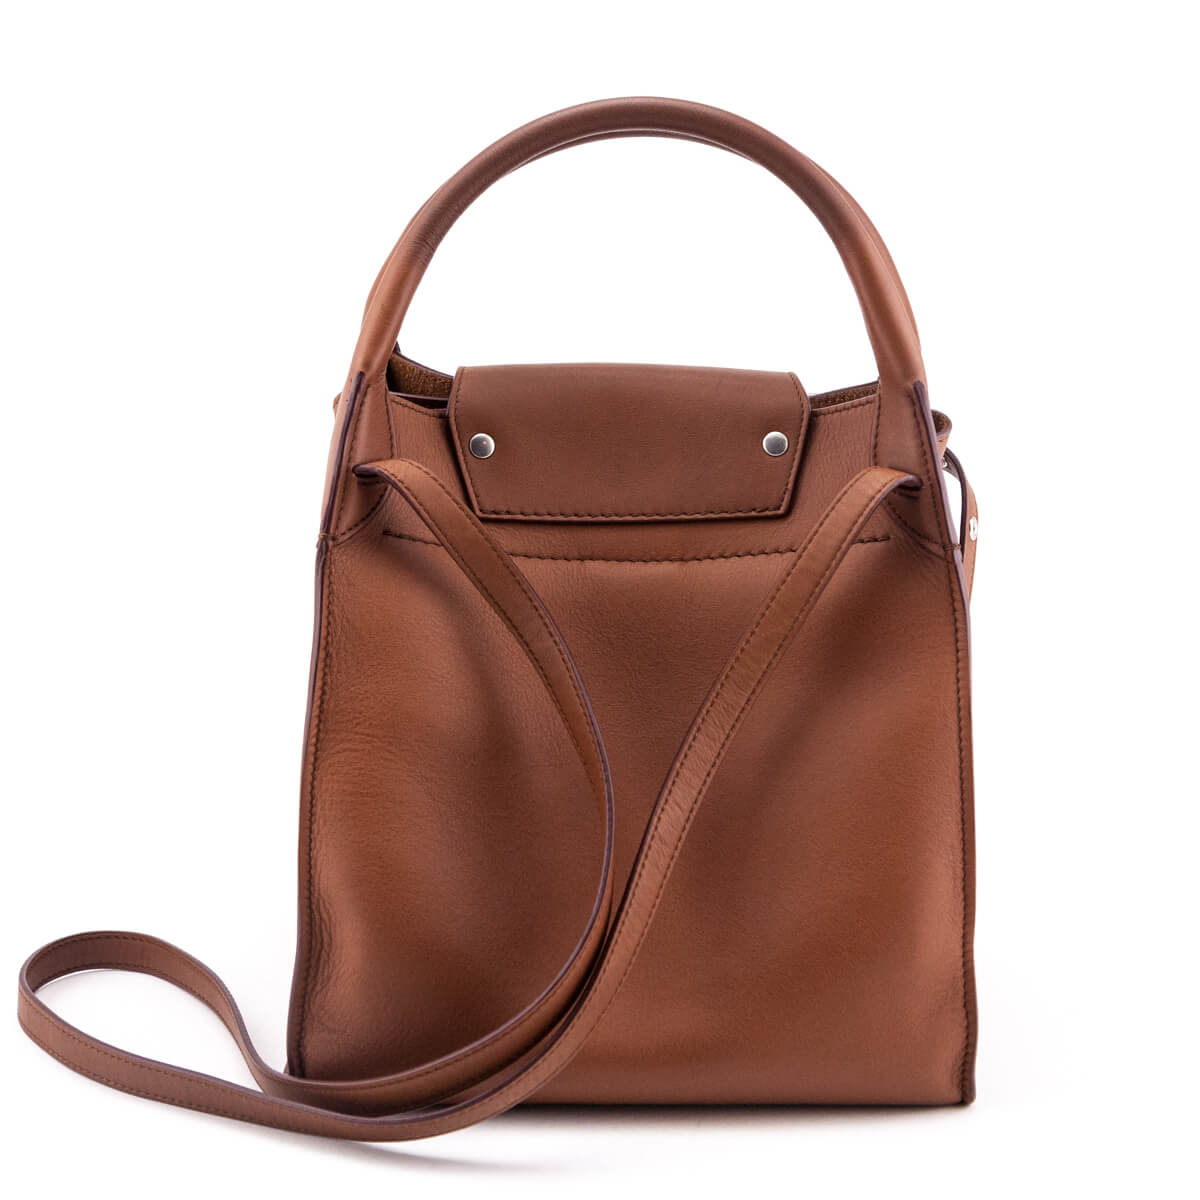 Celine Tan Smooth Calfskin Small Long Strap Big Bag - Celine Handbags